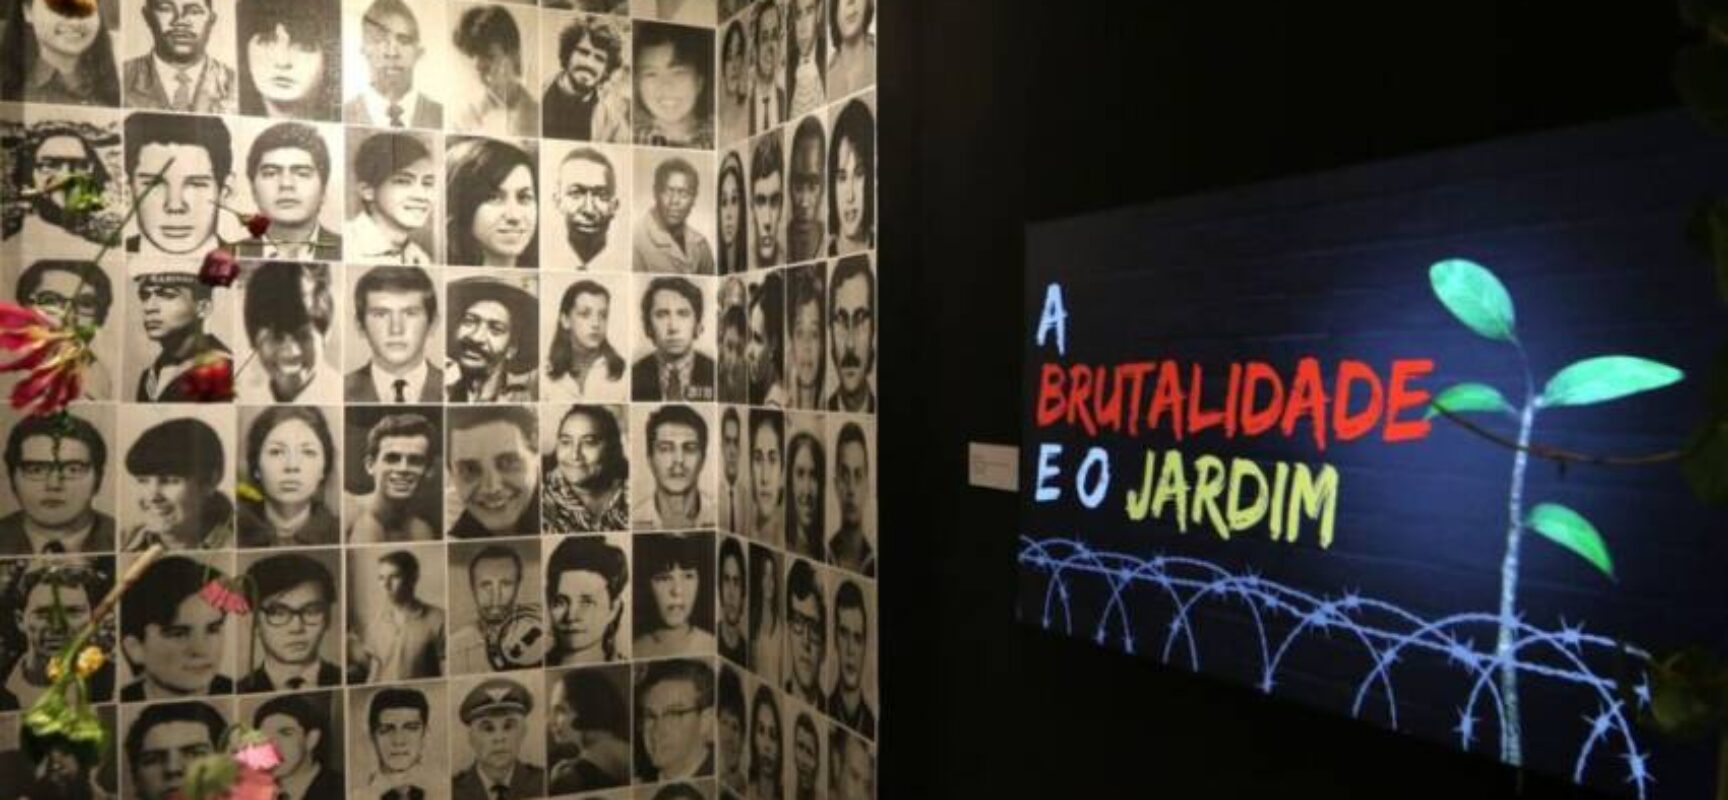 Para 63% dos brasileiros, data do golpe de 1964 deve ser desprezada